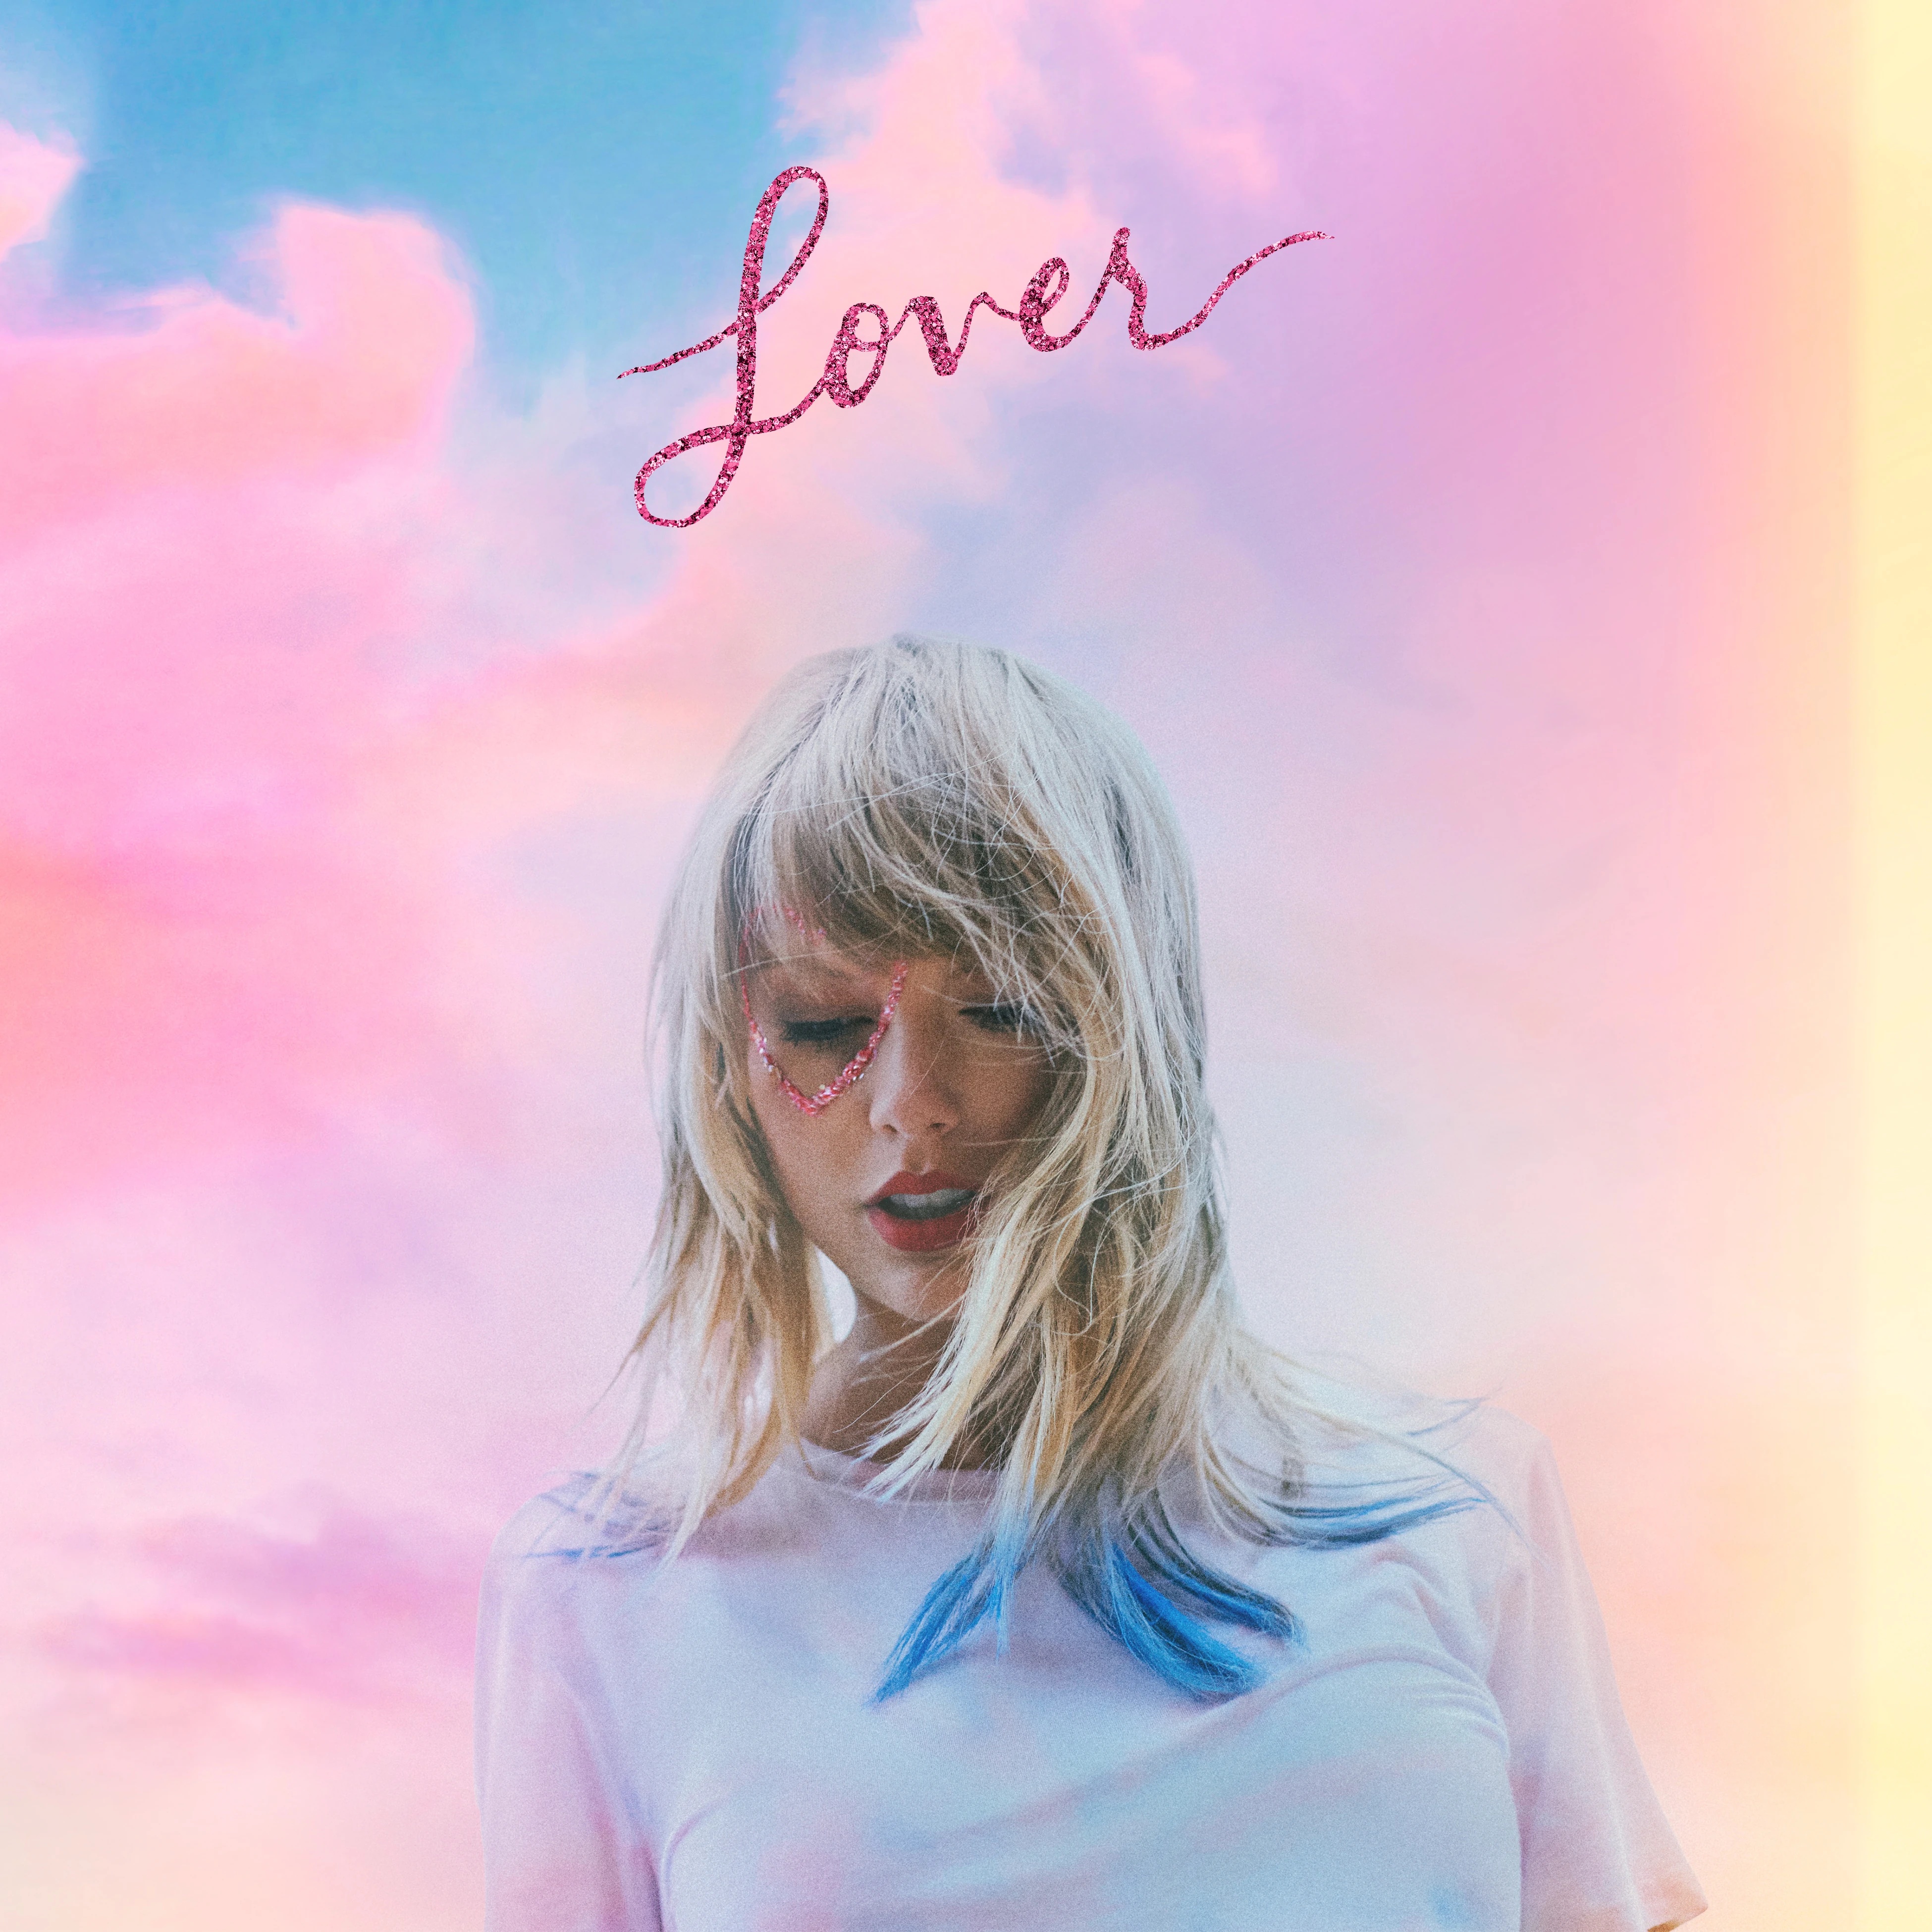 Taylor Swift's 2019 album Lover